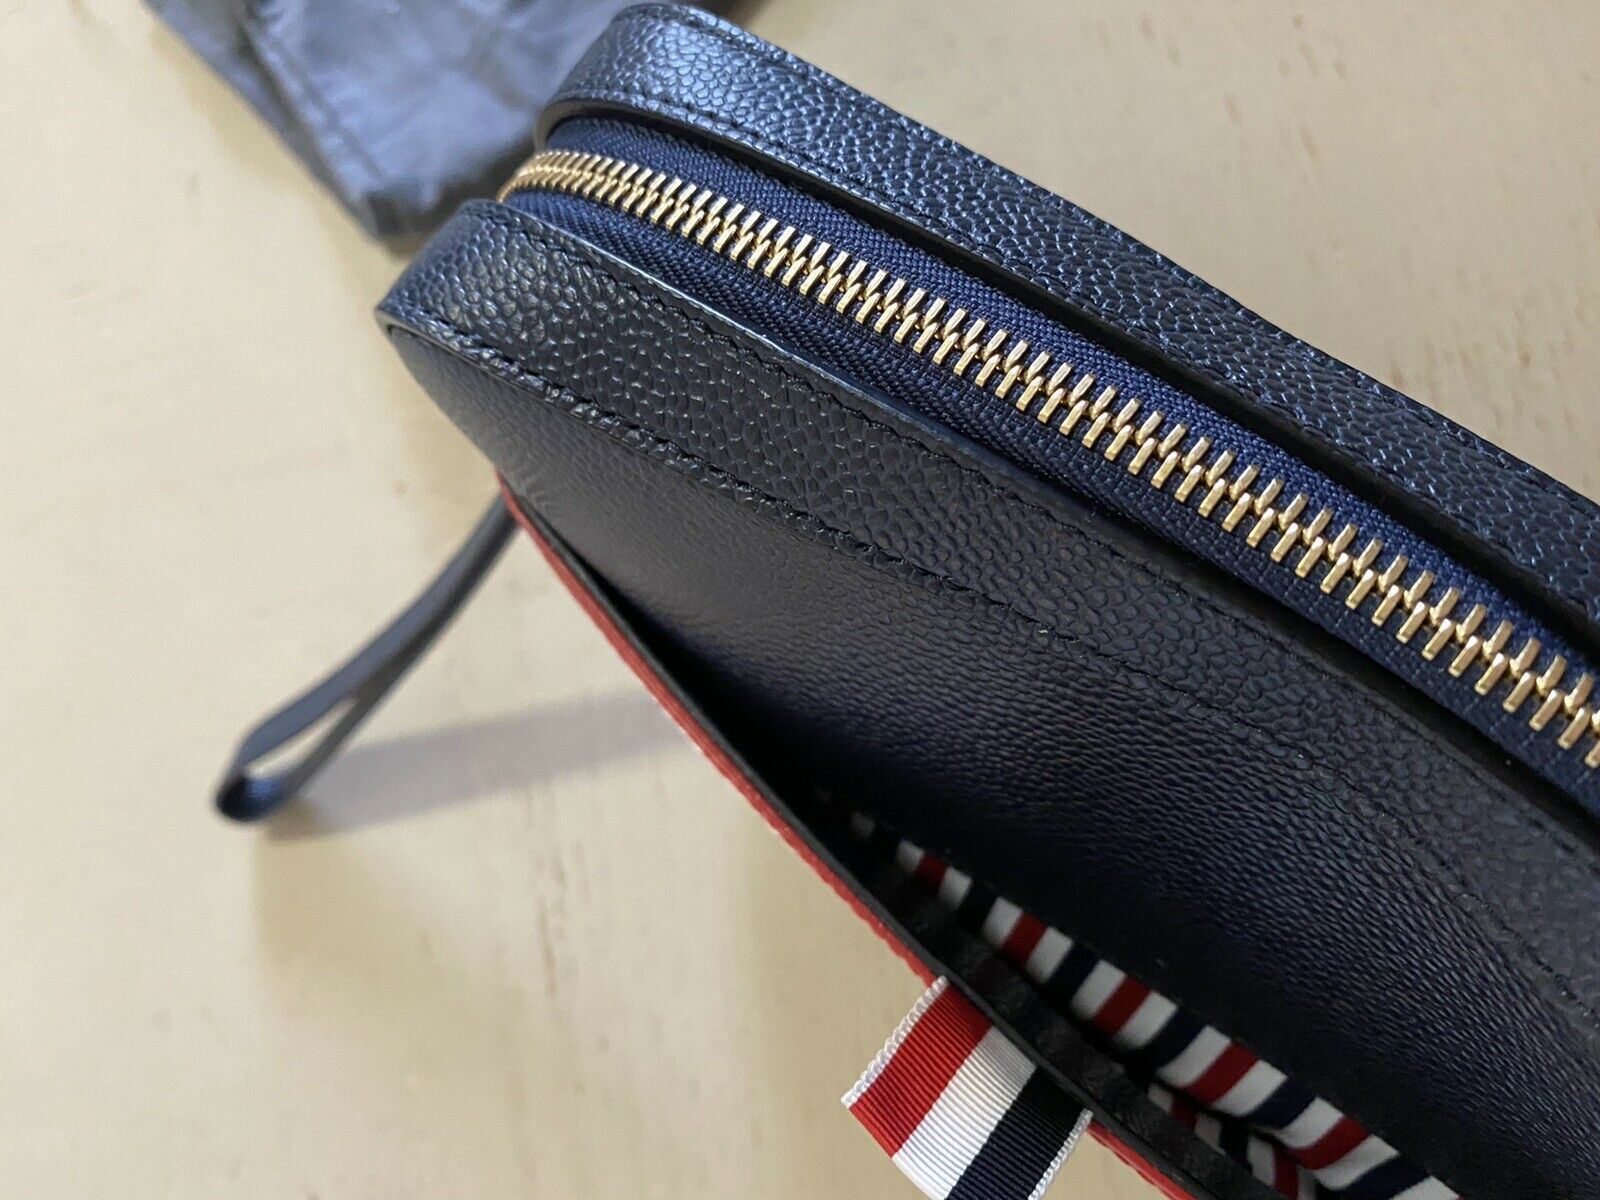 New $990 Thom Browne Men Stripe Detail Leather Toiletry Kit bag Italy